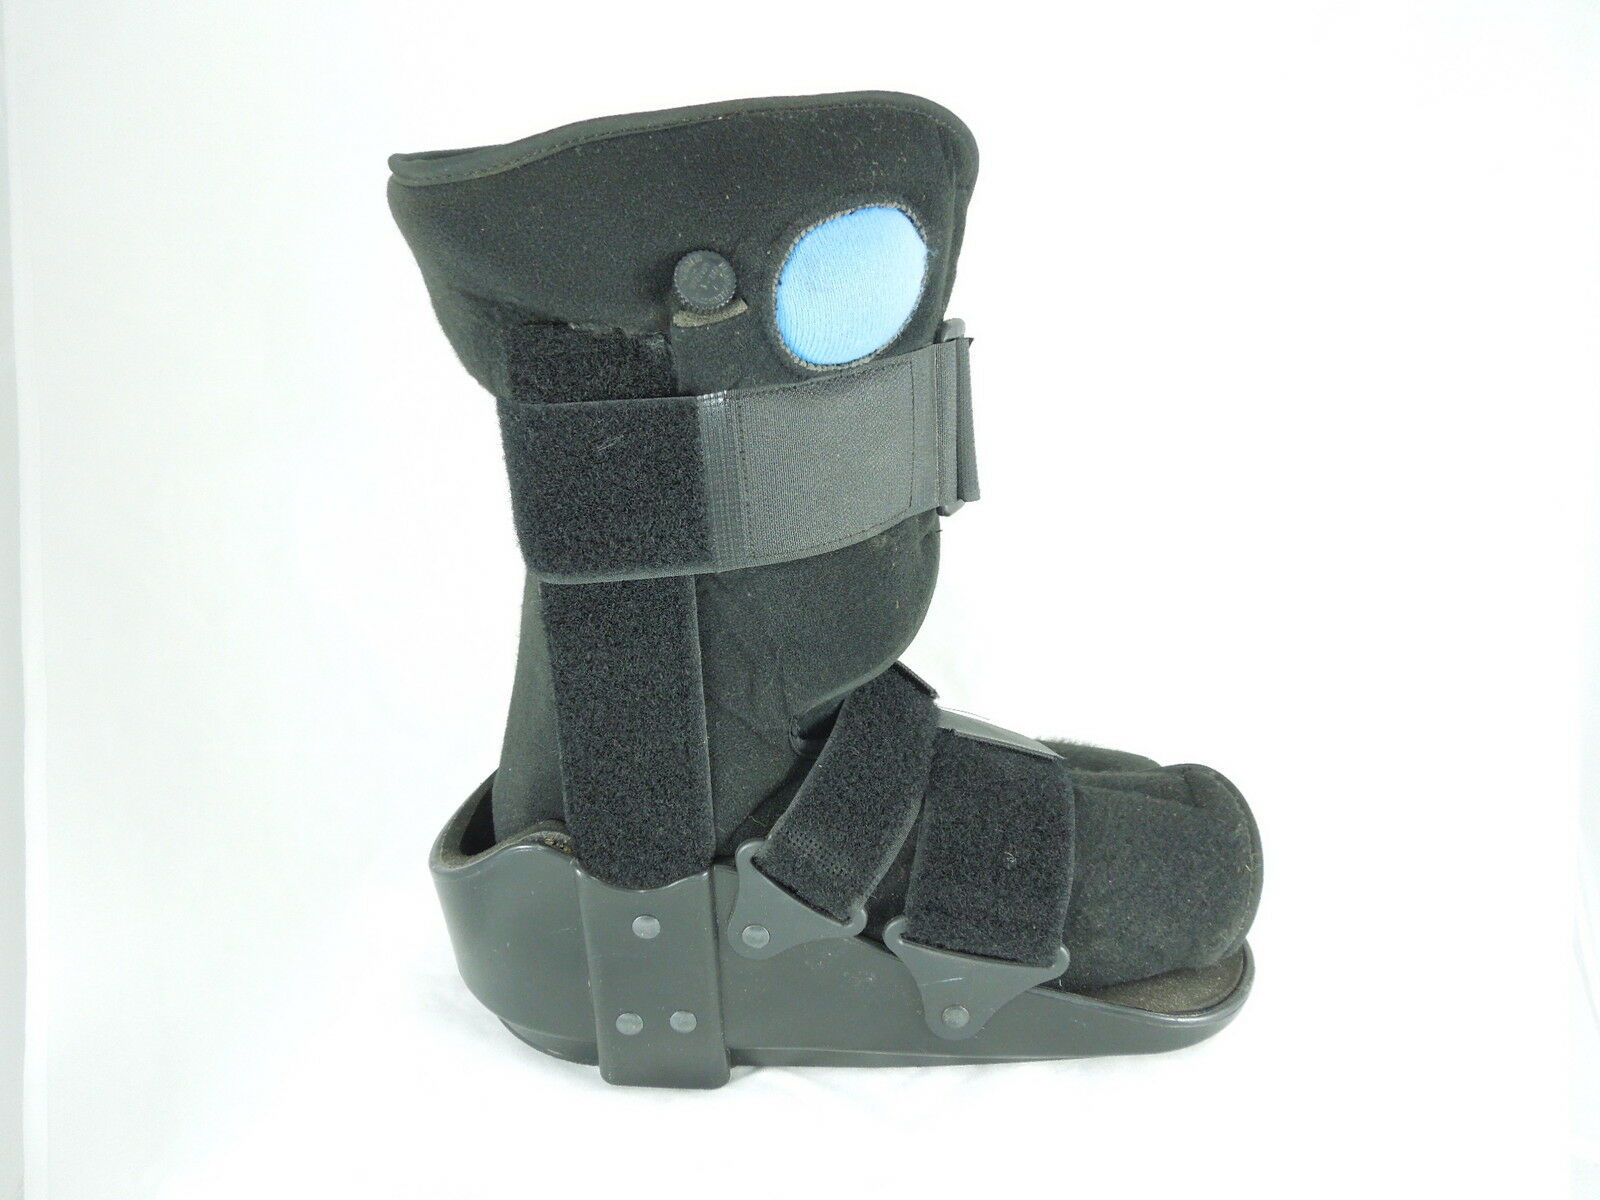 OSSUR INFLATABLE FOOT ANKLE BRACE Black Metal size medium Removable Support Cast - $29.69